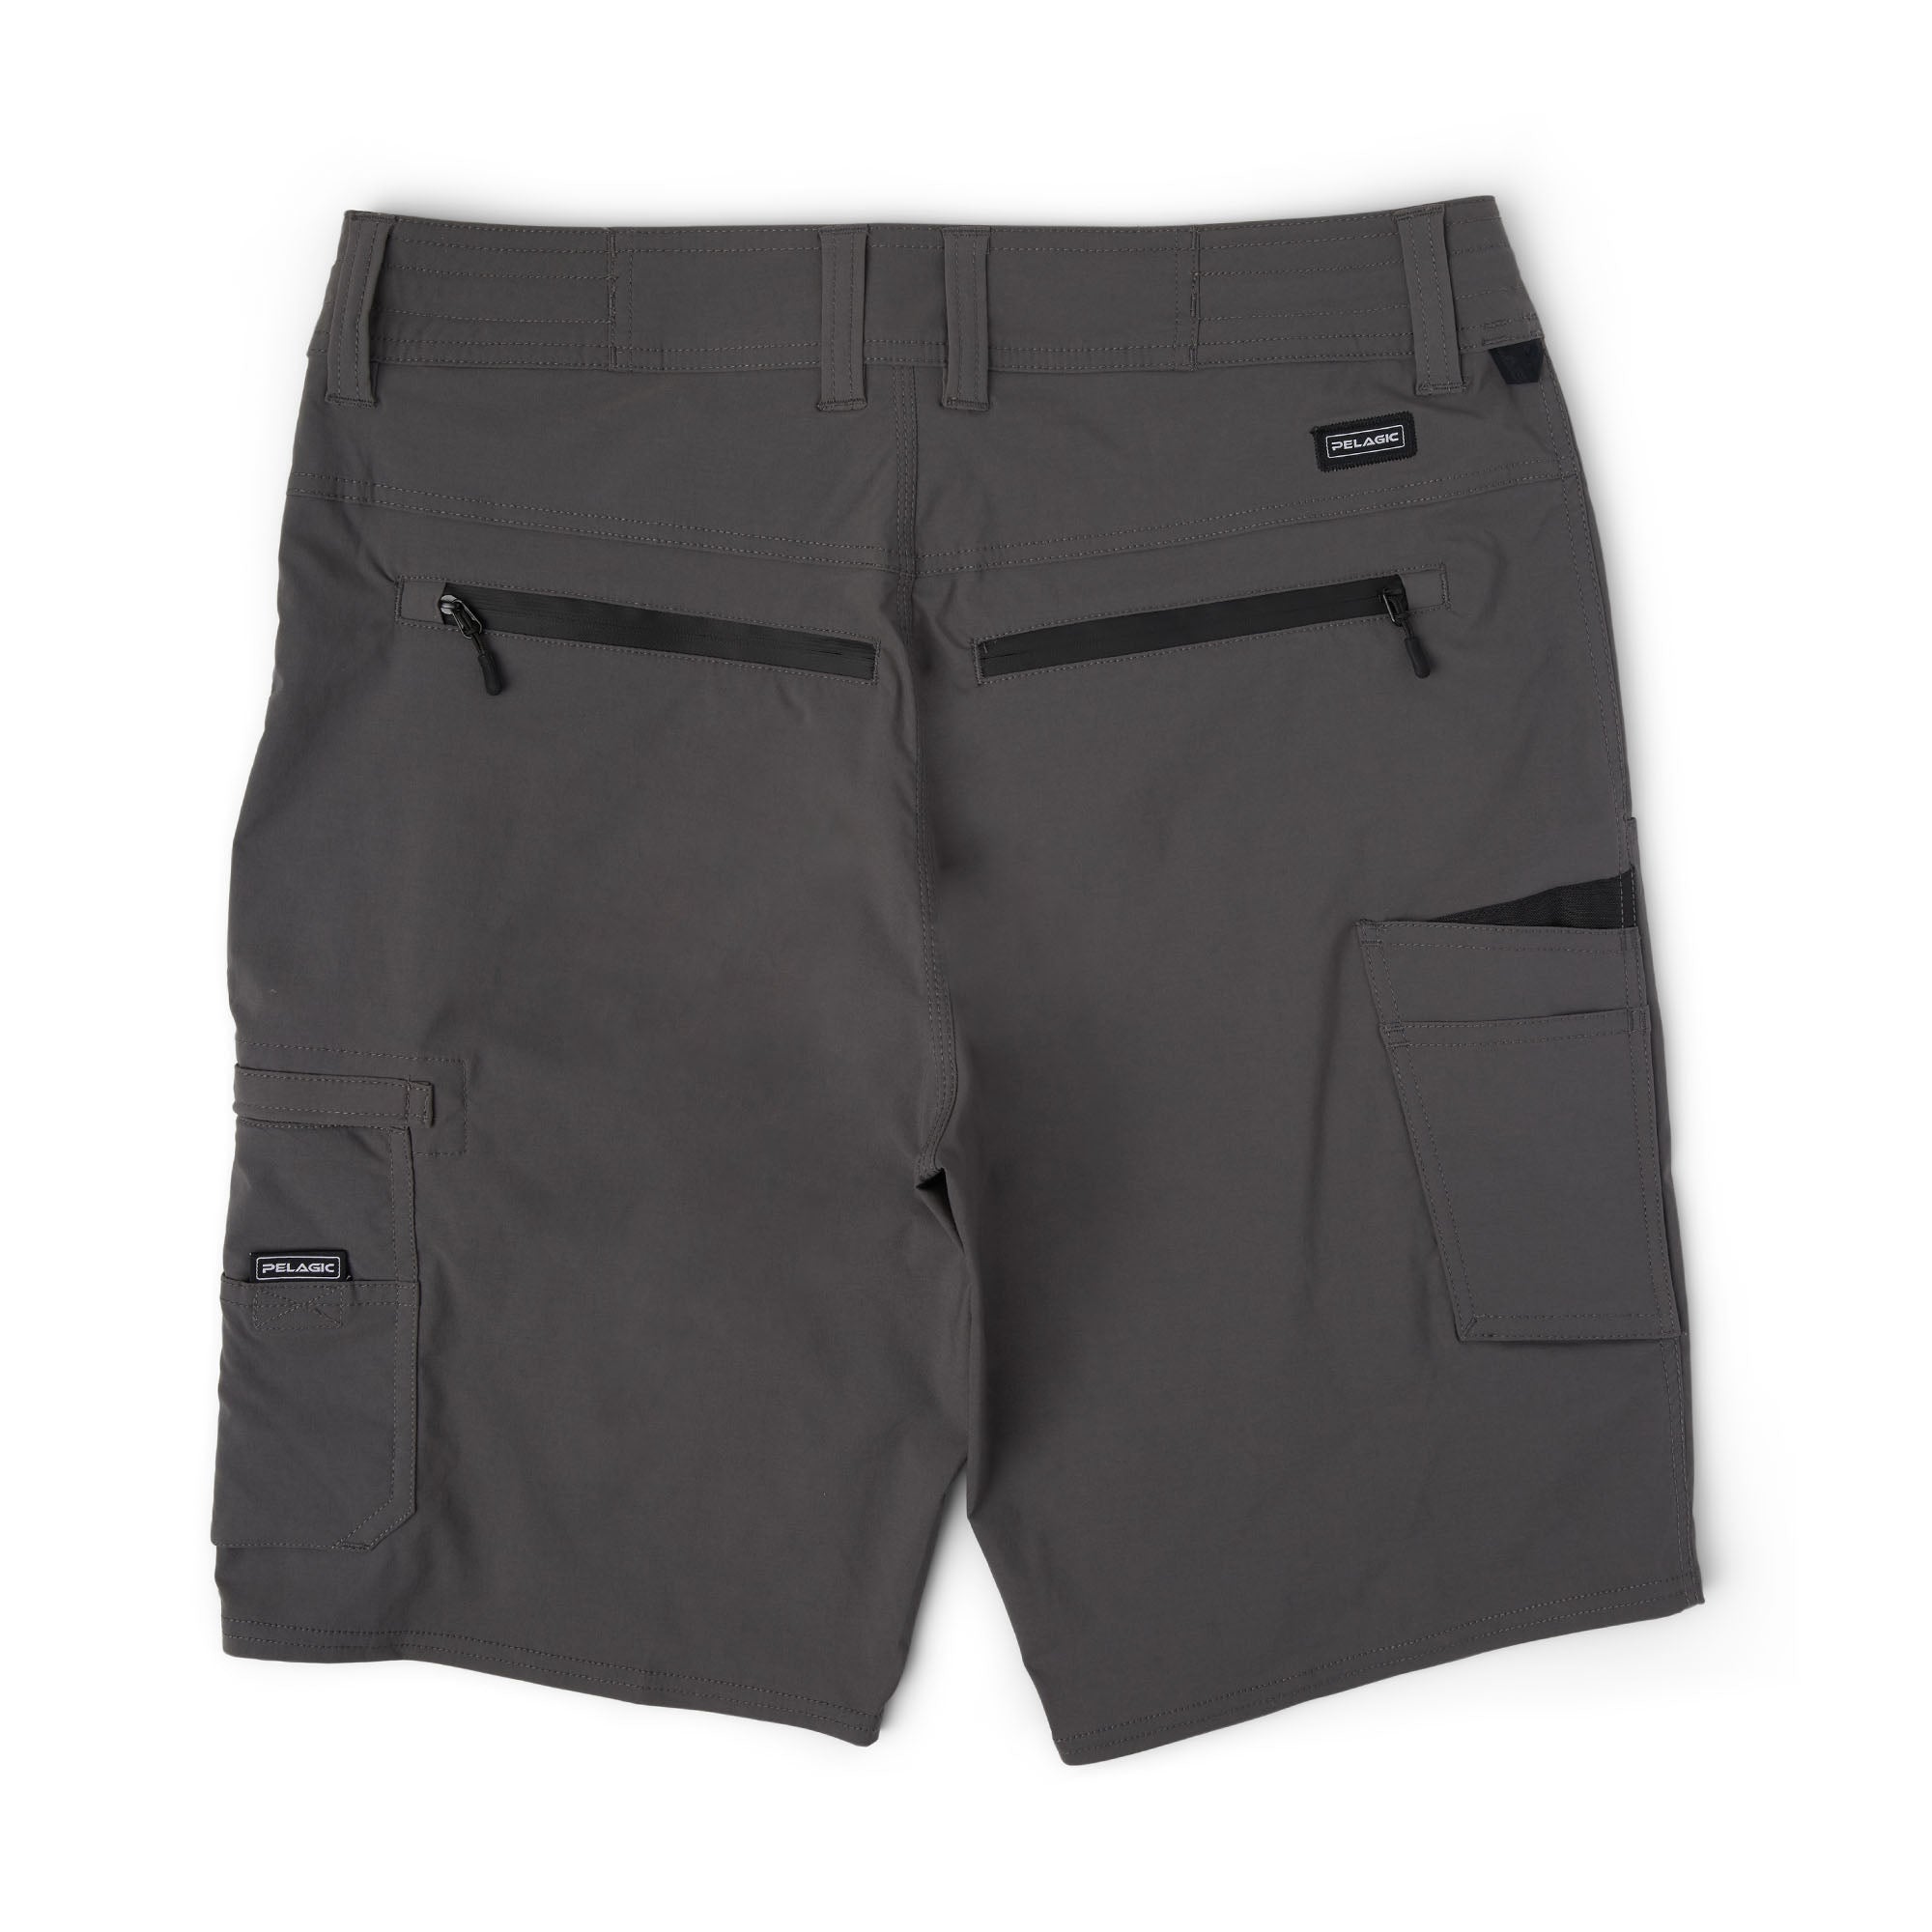 Pelagic Traverse Fishing Shorts for Men - Charcoal - 36